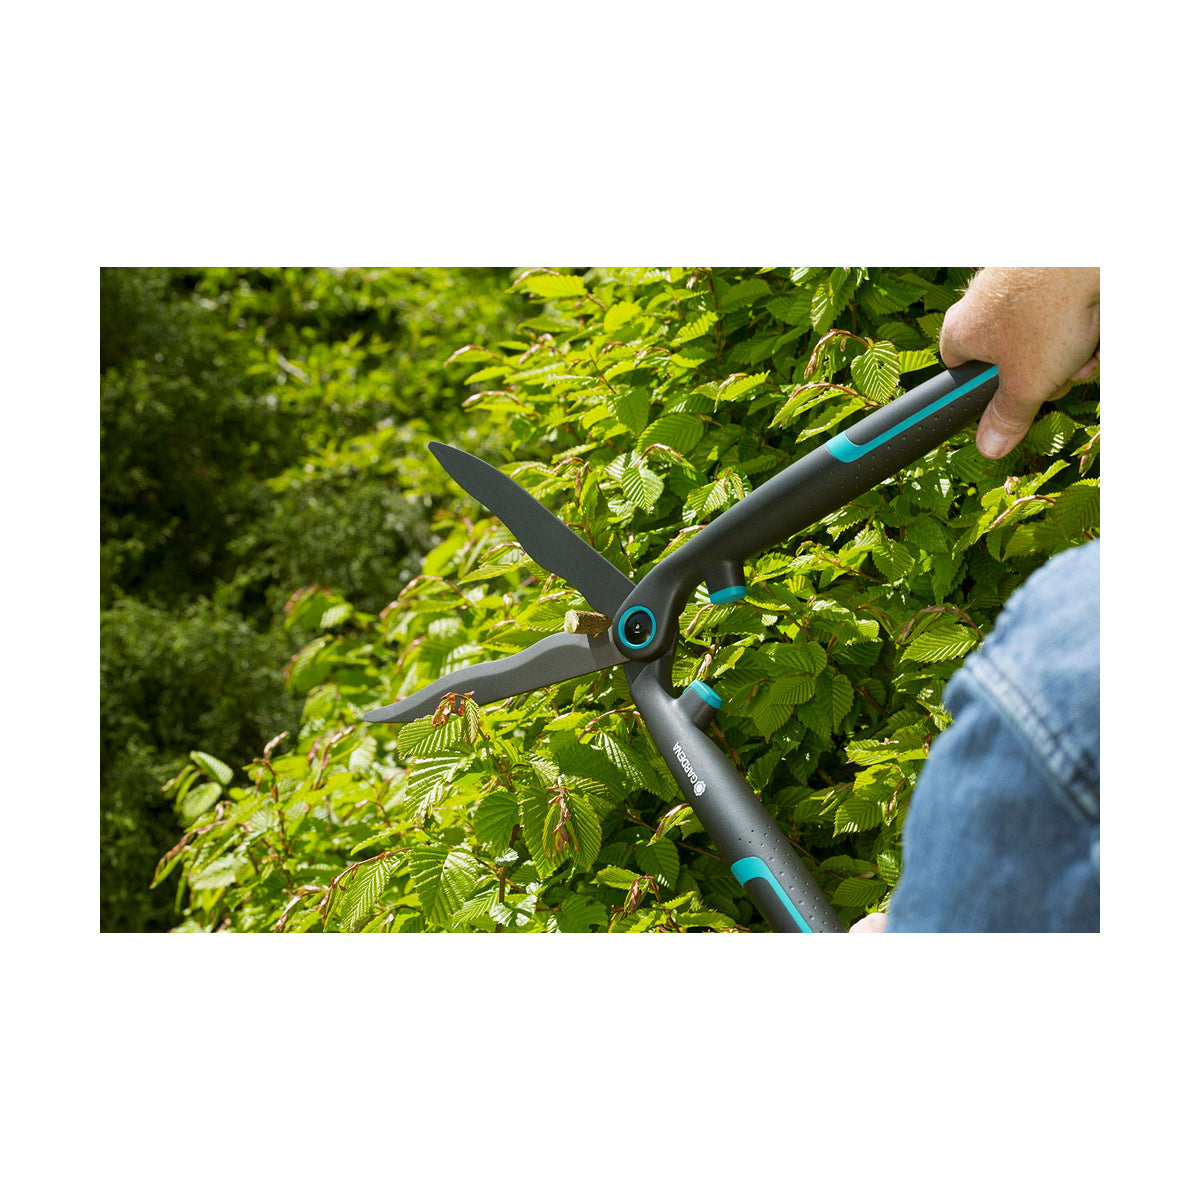 Hedging trimmer Gardena Easycut 12301-20